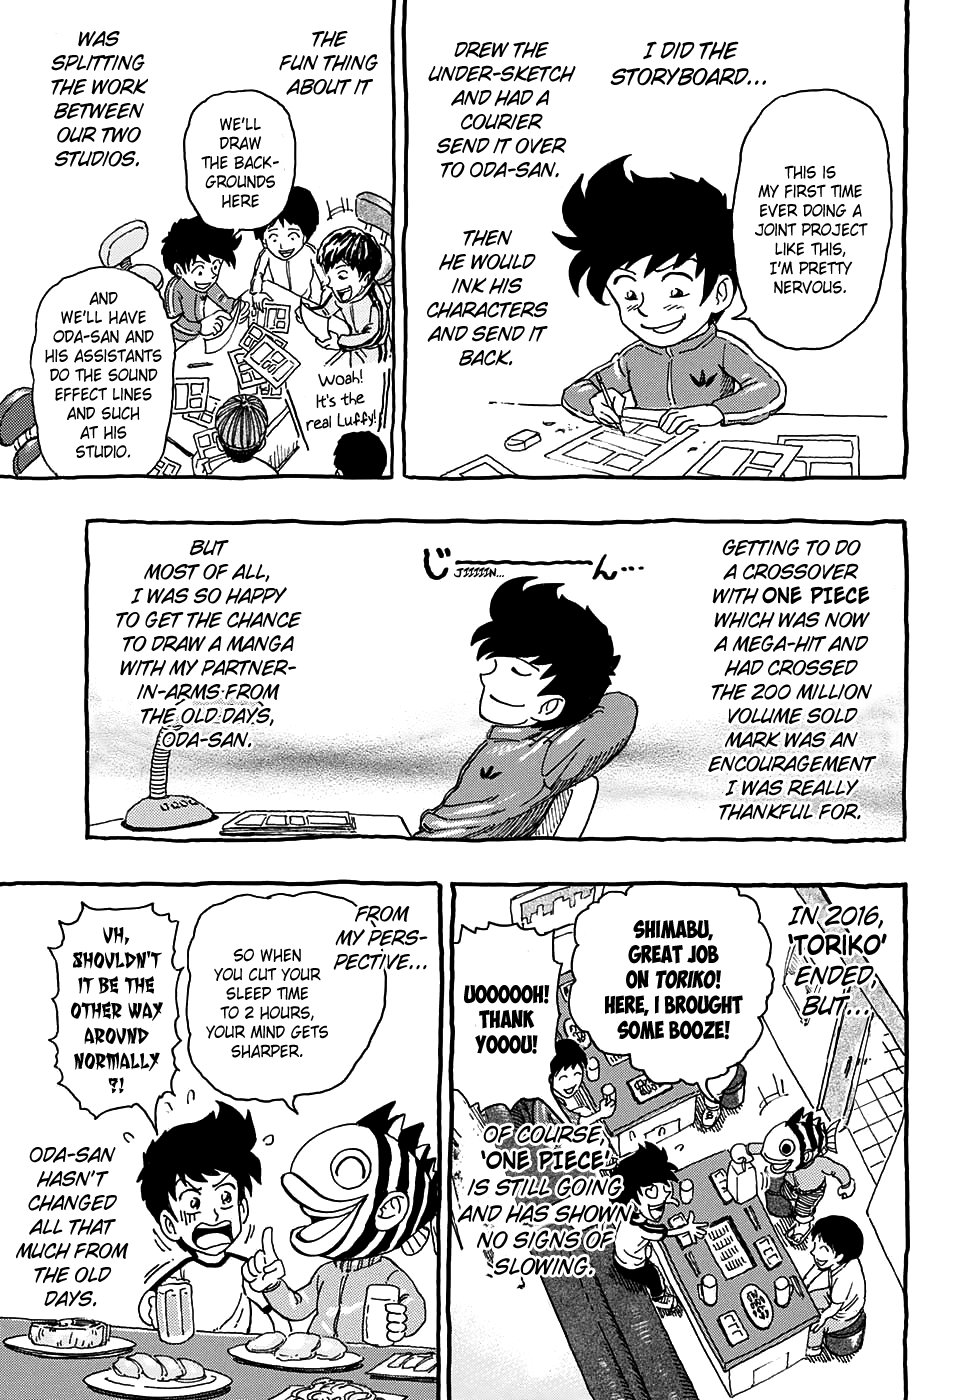 Memories with Oda-san Manga! Vol.1 Ch.1